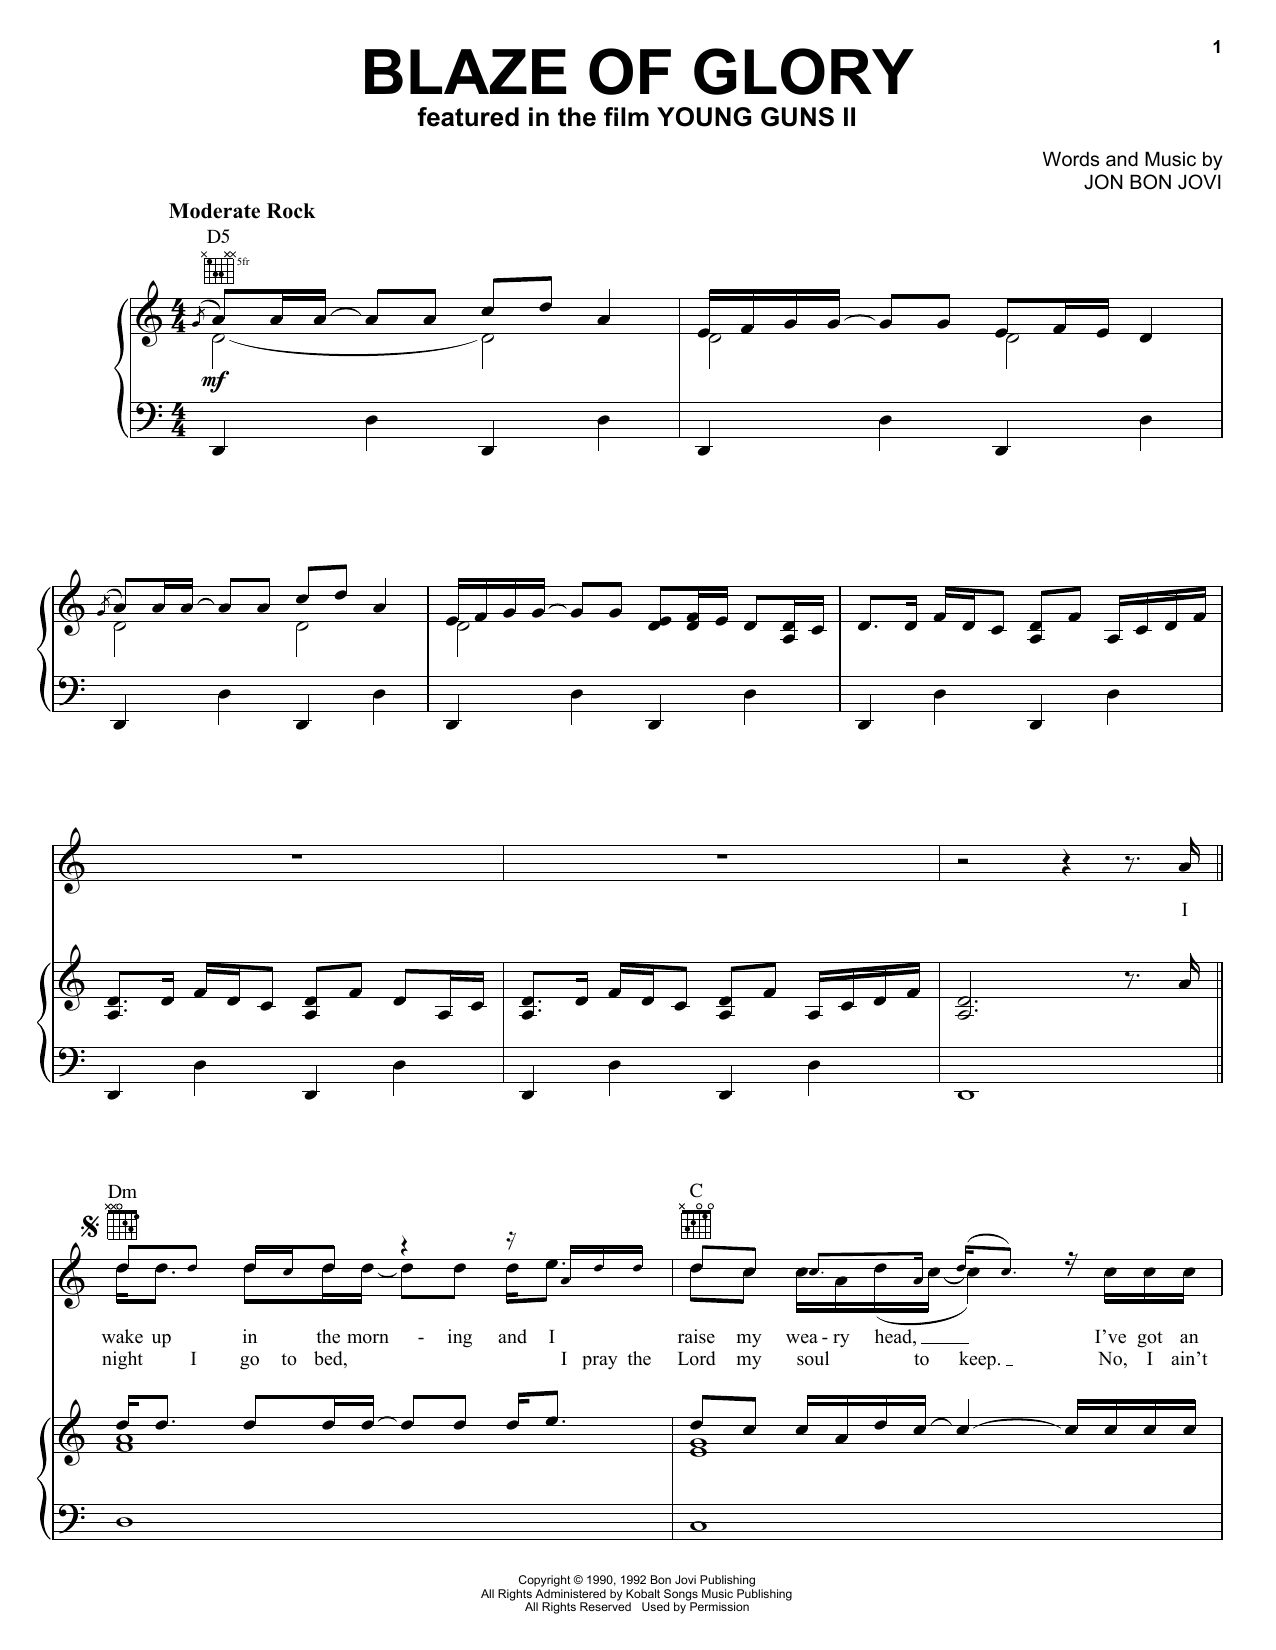 Jon Bon Jovi Blaze Of Glory Sheet Music Notes & Chords for Clarinet - Download or Print PDF